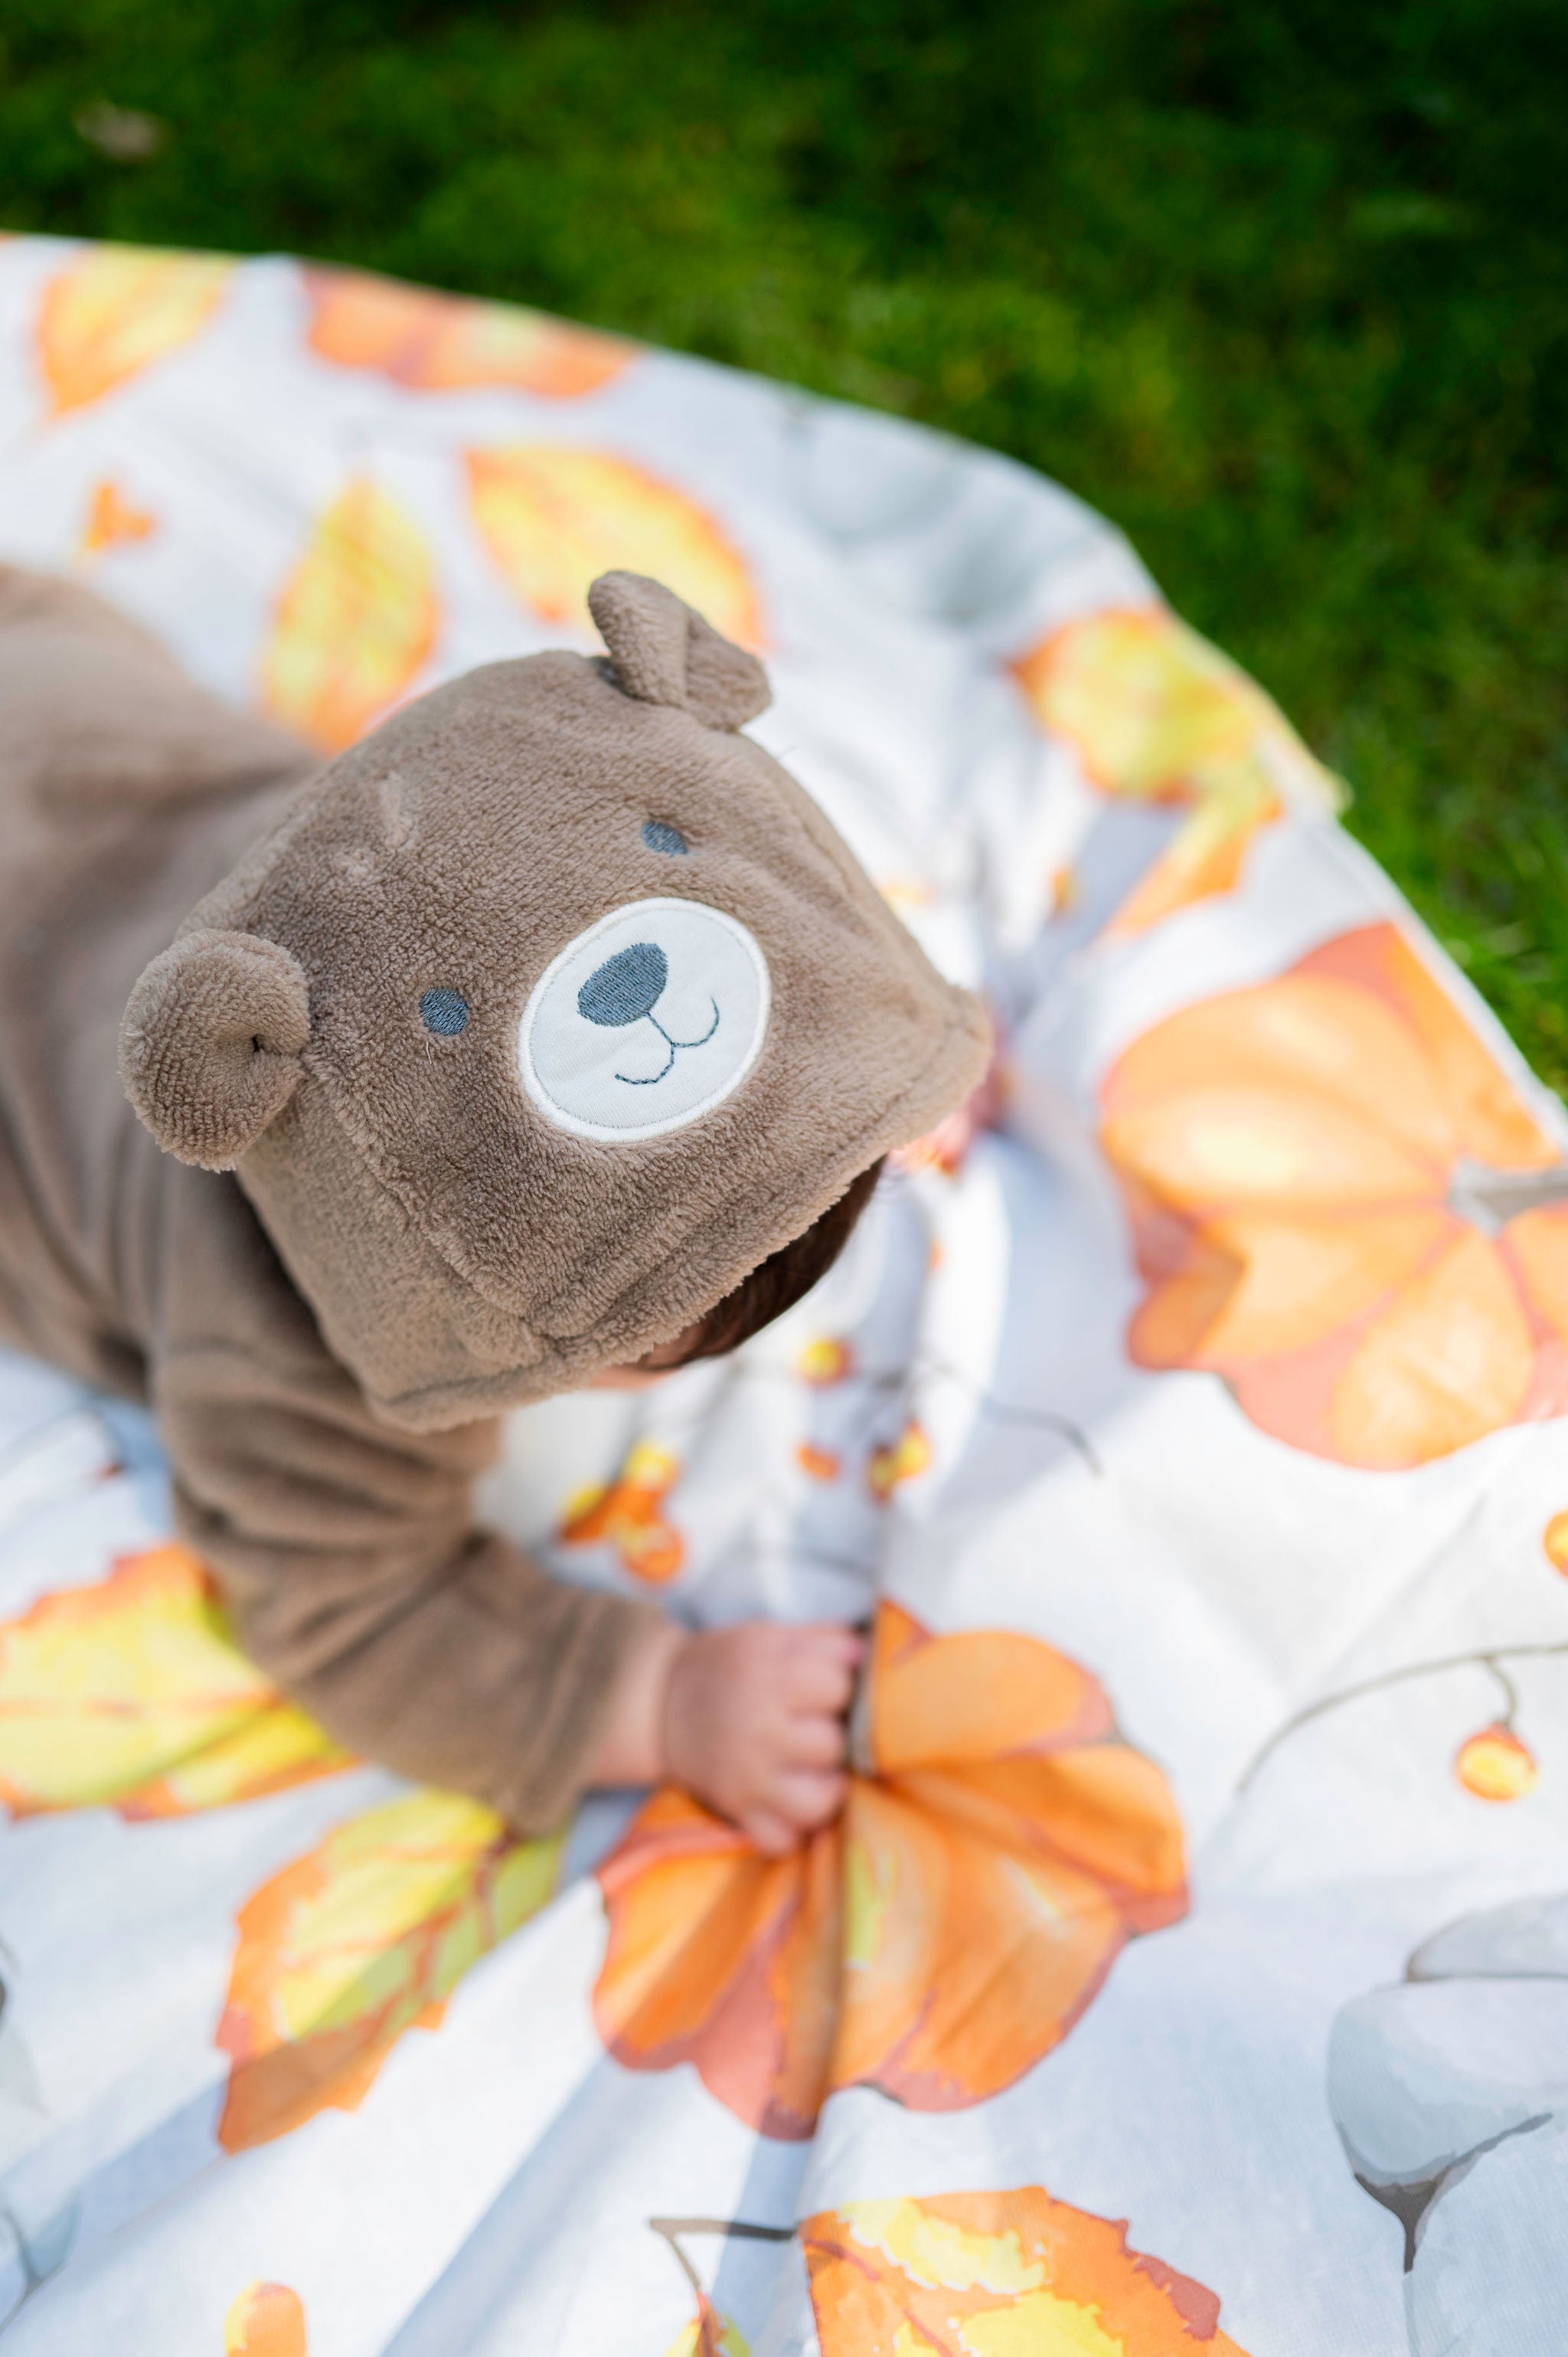 Bear Baby Plush Softie Animal Costume With Ears